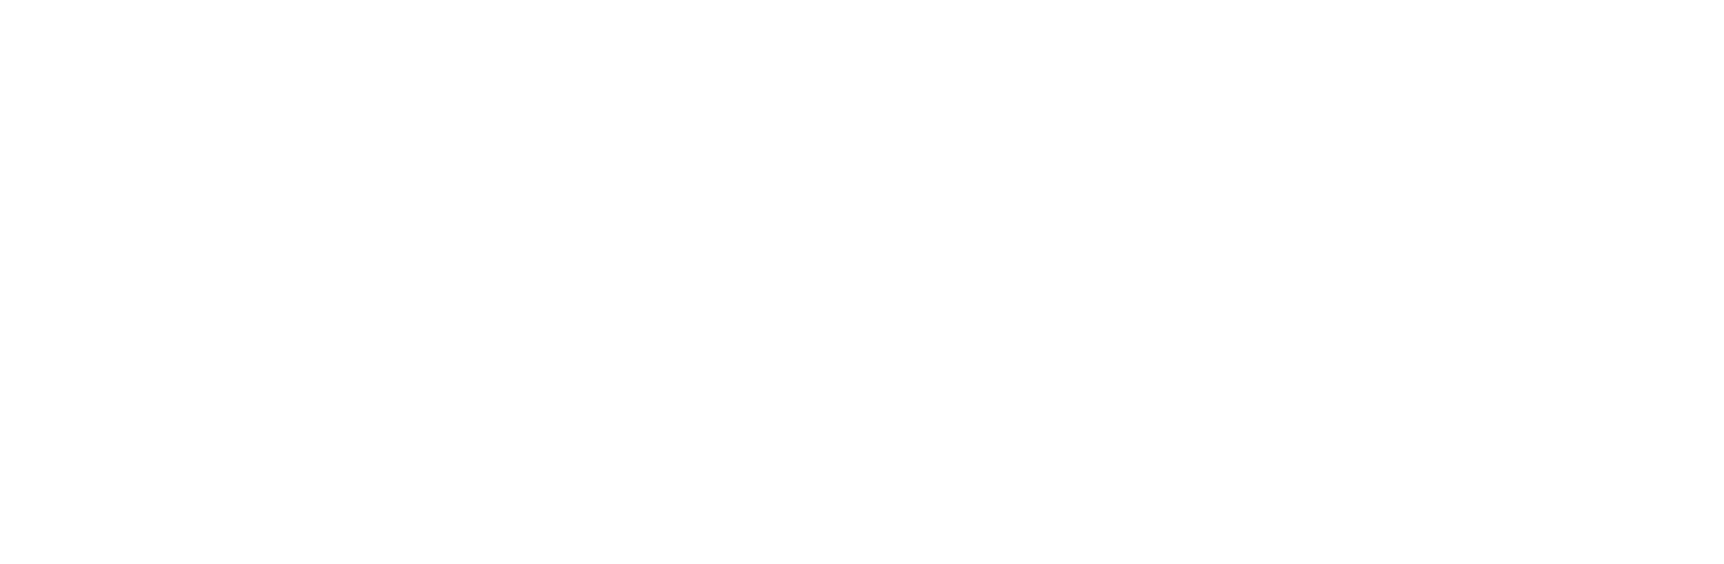 Logan Logo - Logan Technology Inc.